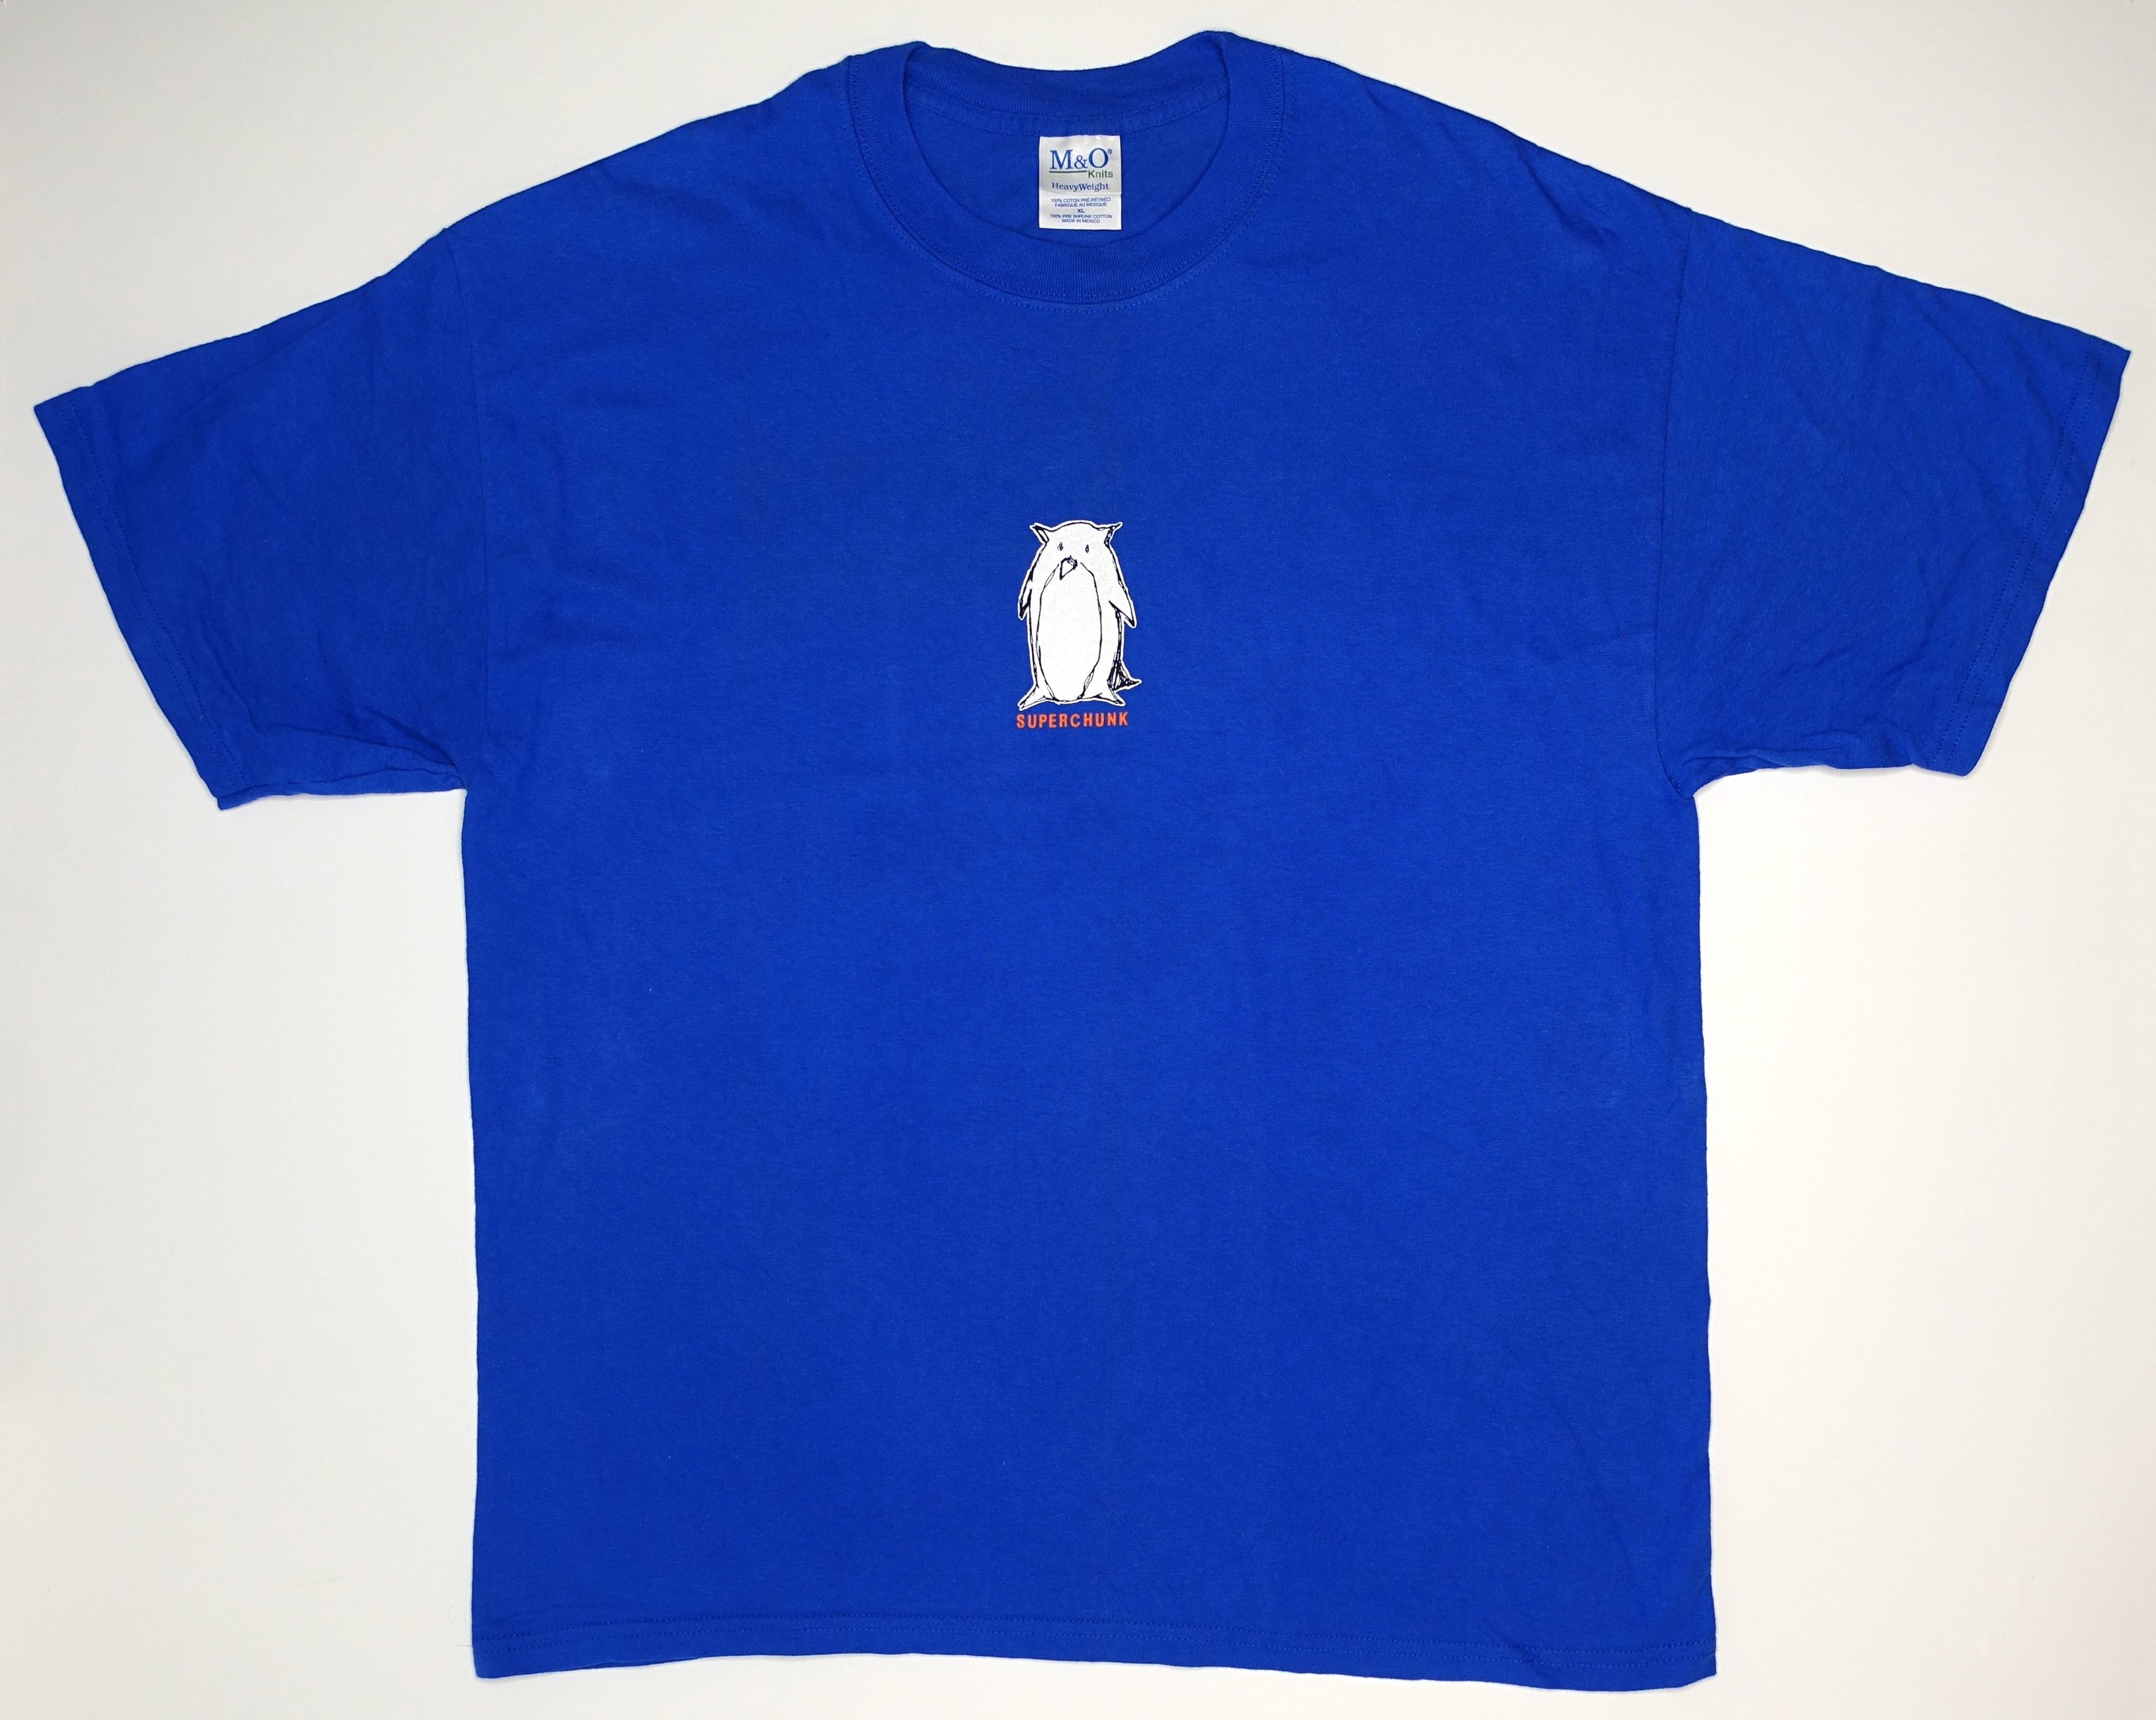 Superchunk - The Majestic 1999 Tour Shirt Size XL